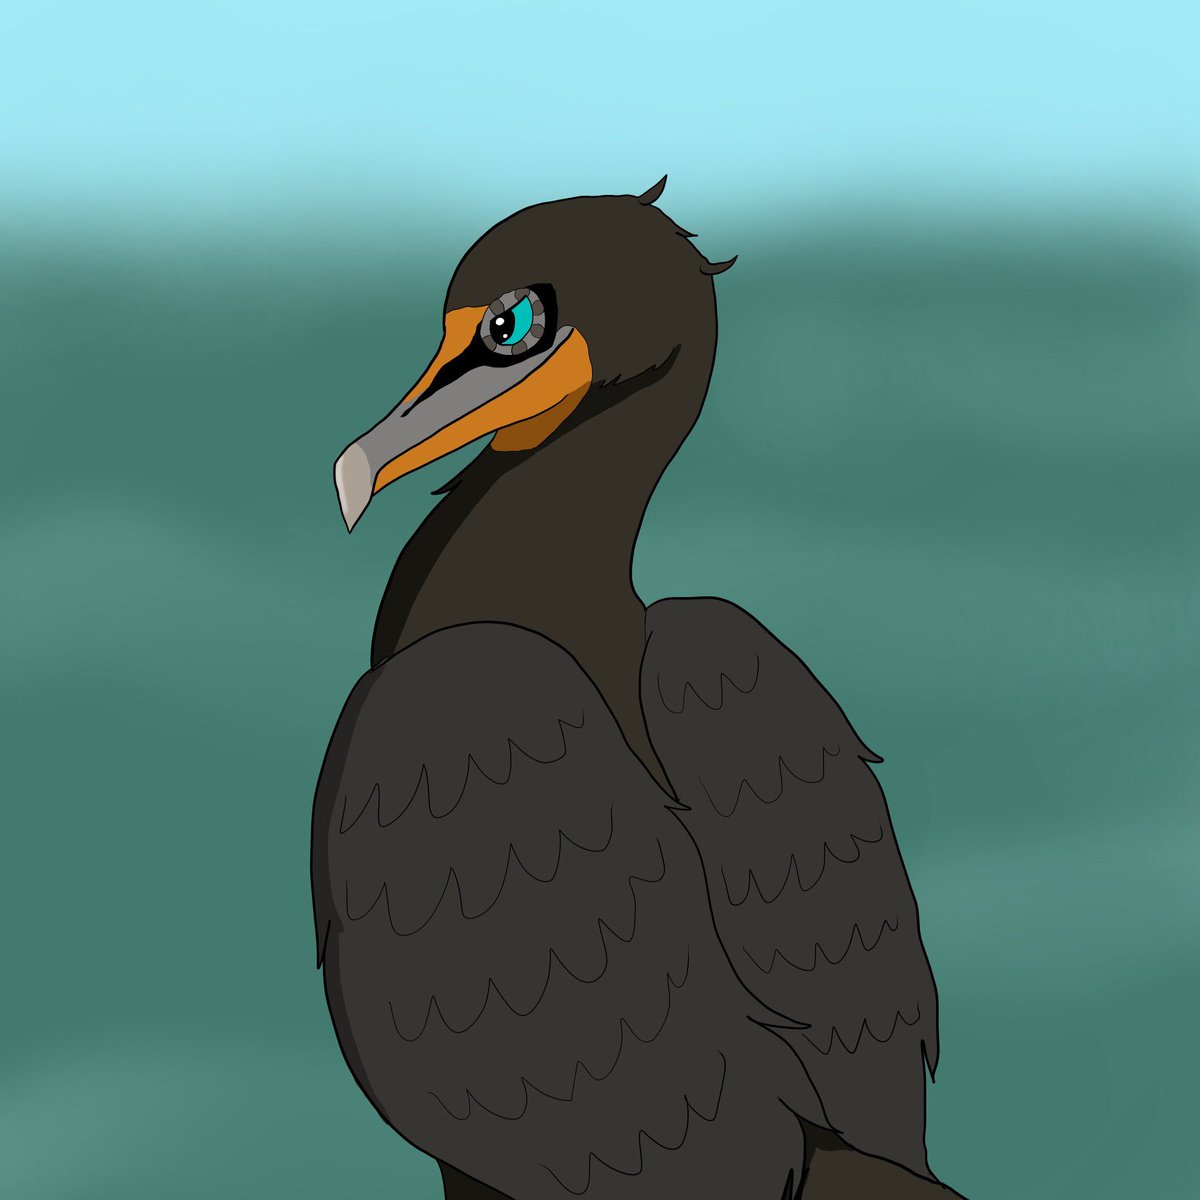 Corm of rant

#Bird #digitalart #cormorant #doublecrestedcormorant